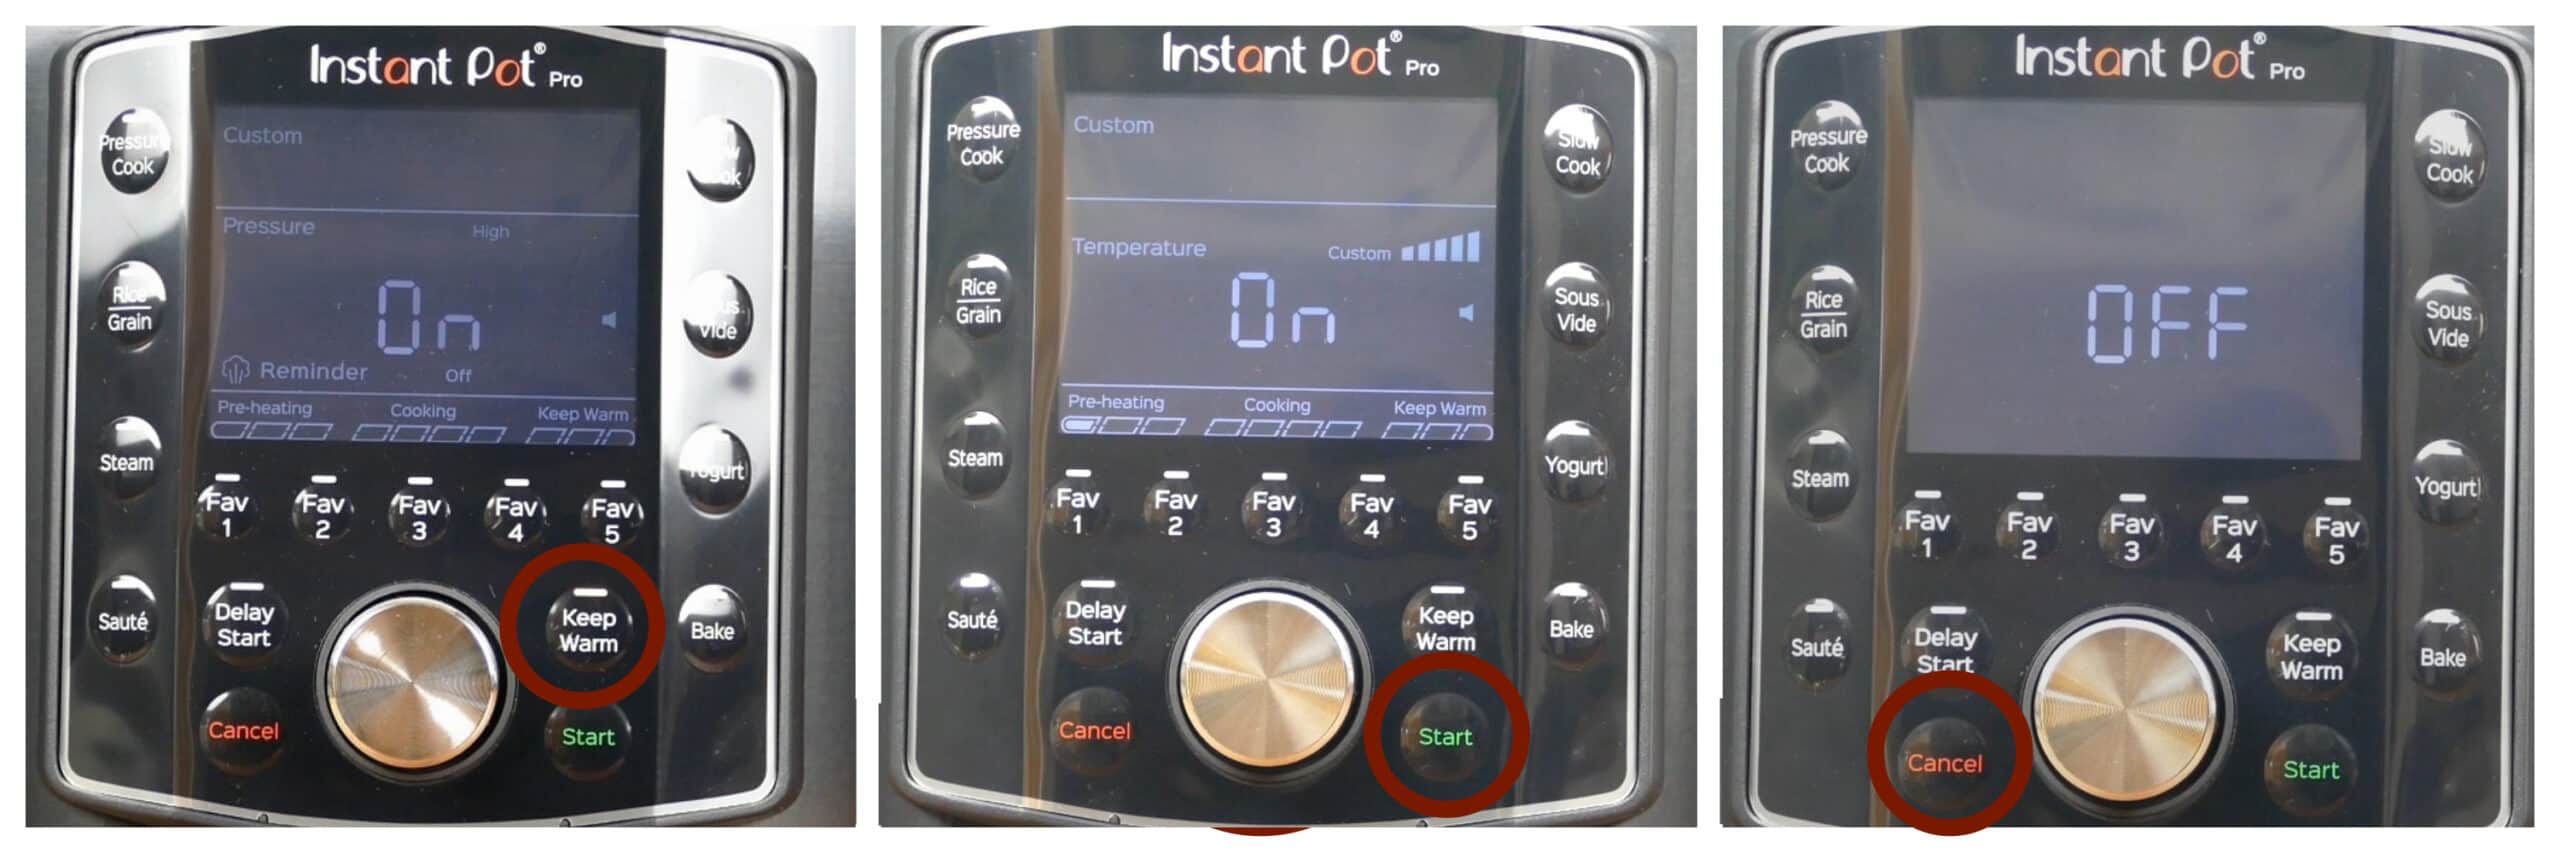 Instant Pot Pro collage - keep warm button, start buttom, cancel button